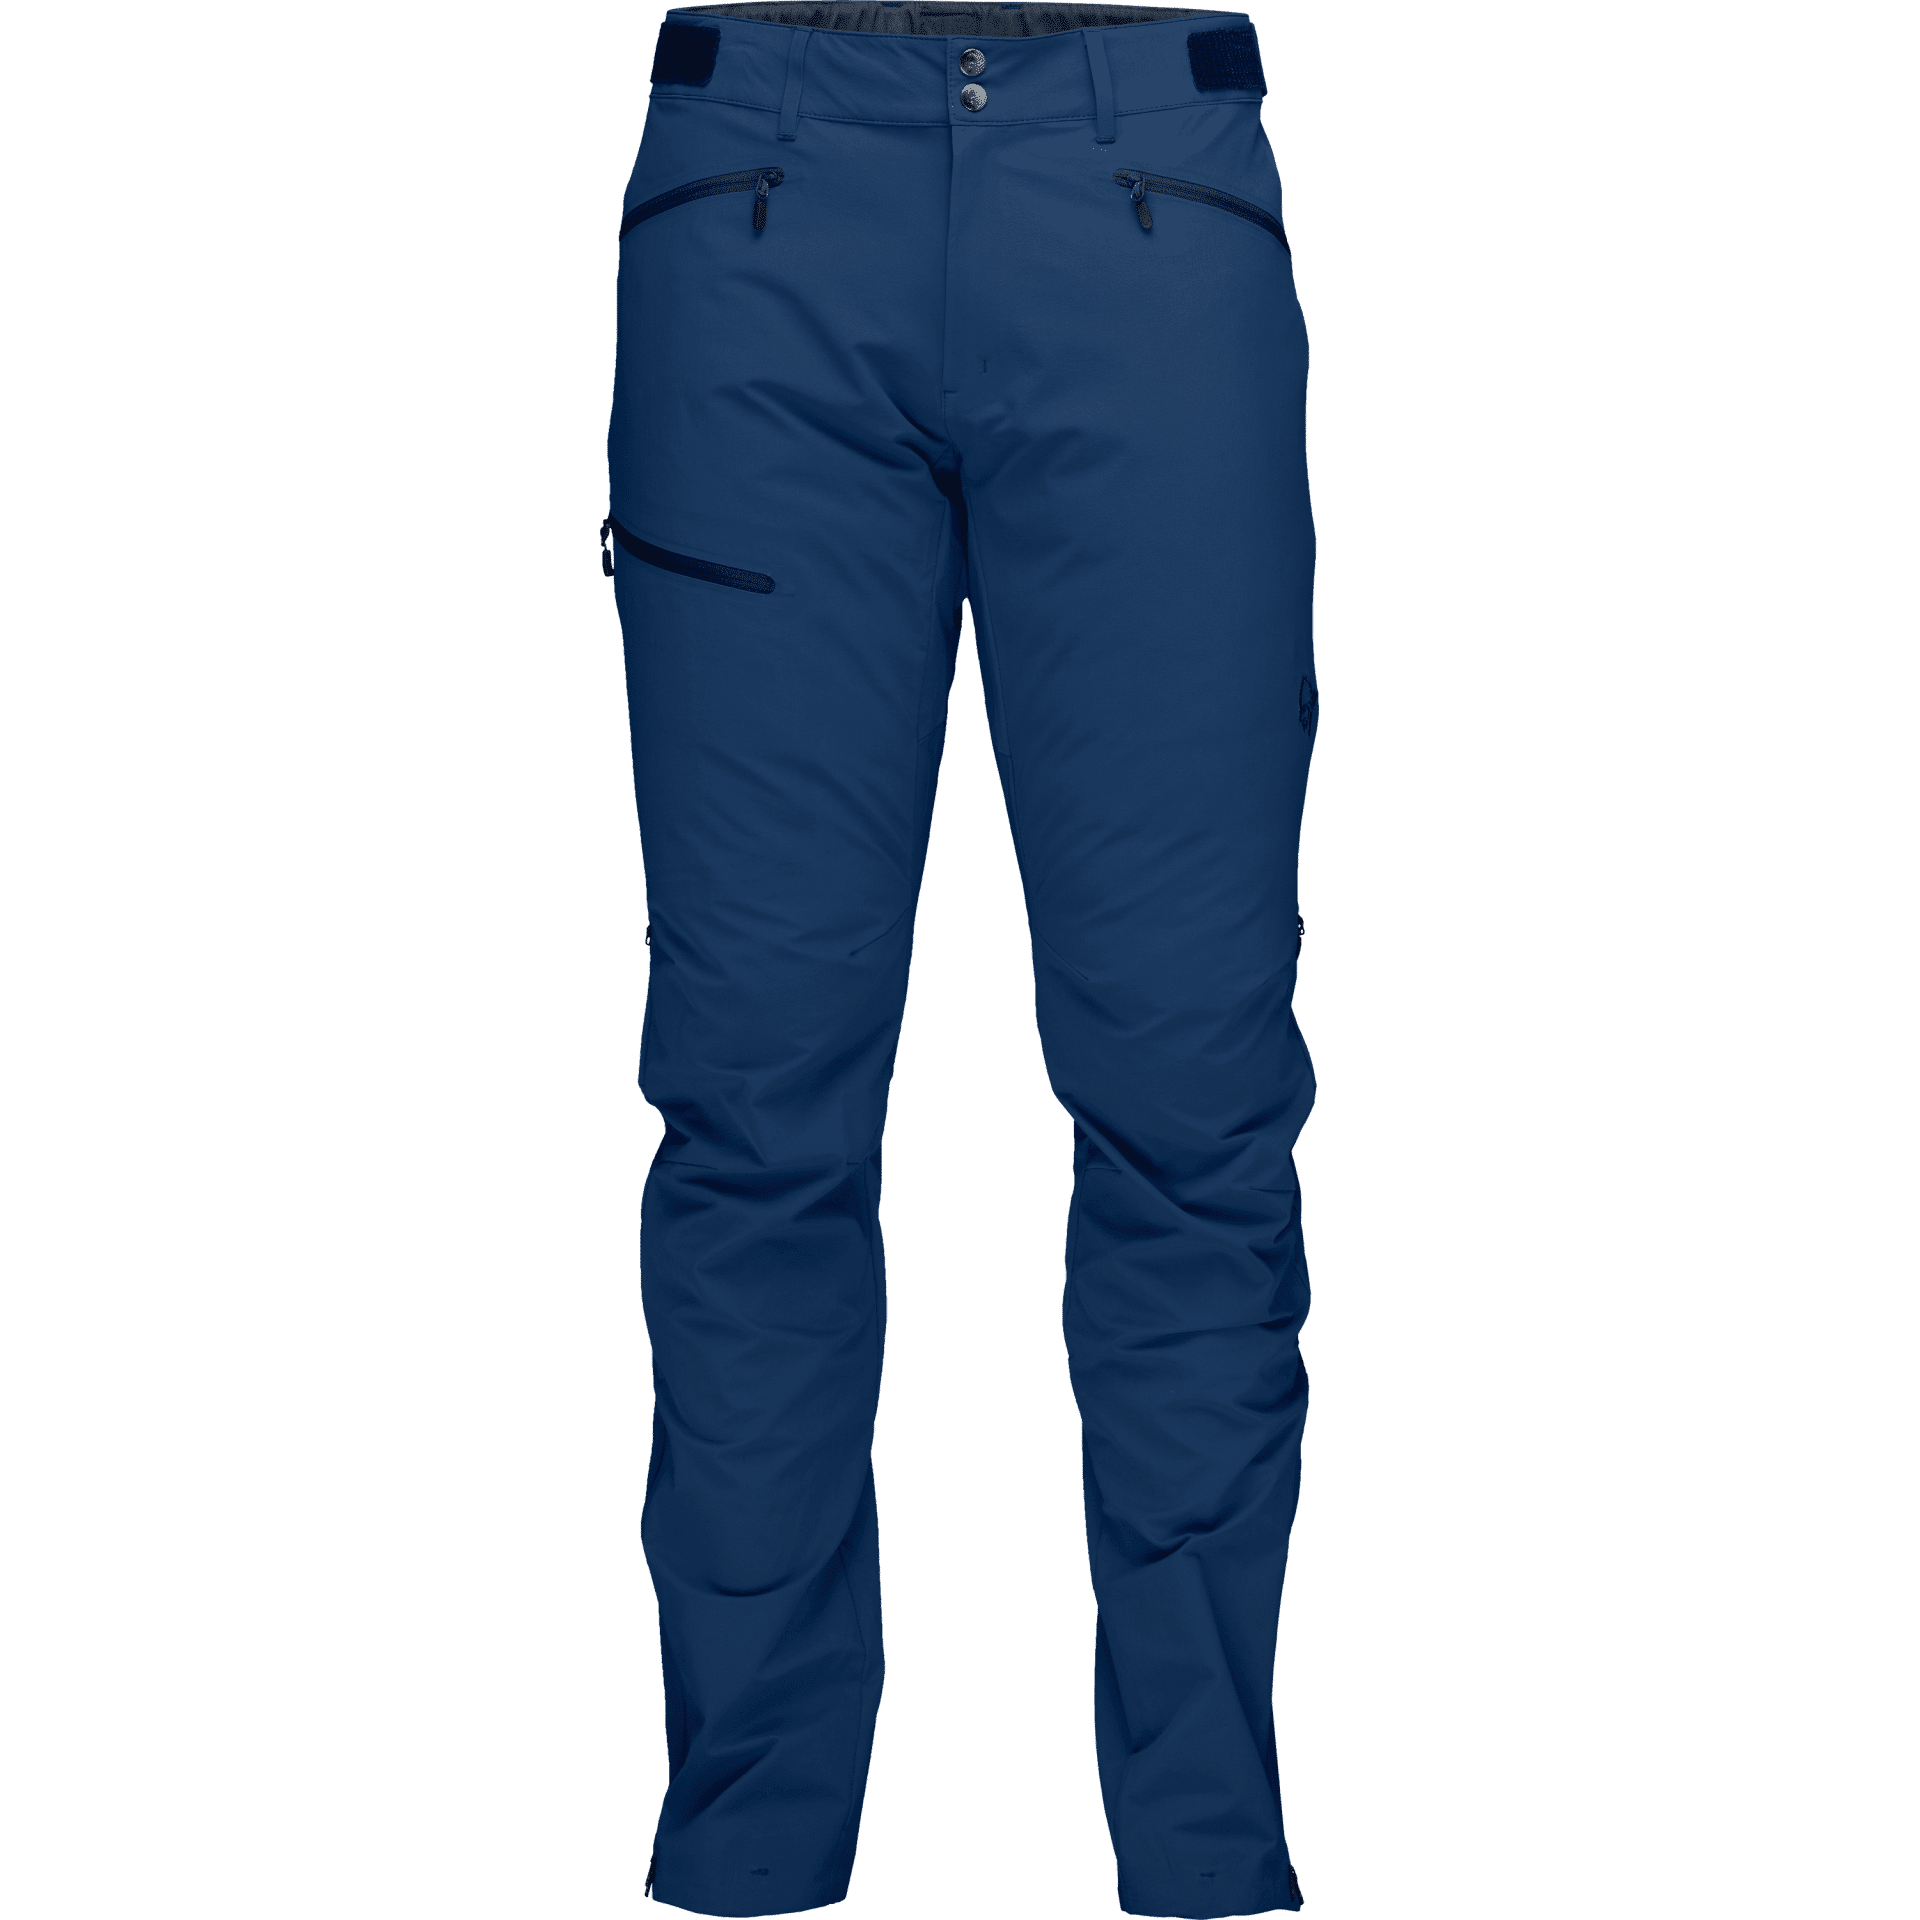 Nørrona Falketind Flex1 Pants - Pantaloni softshell - Uomo